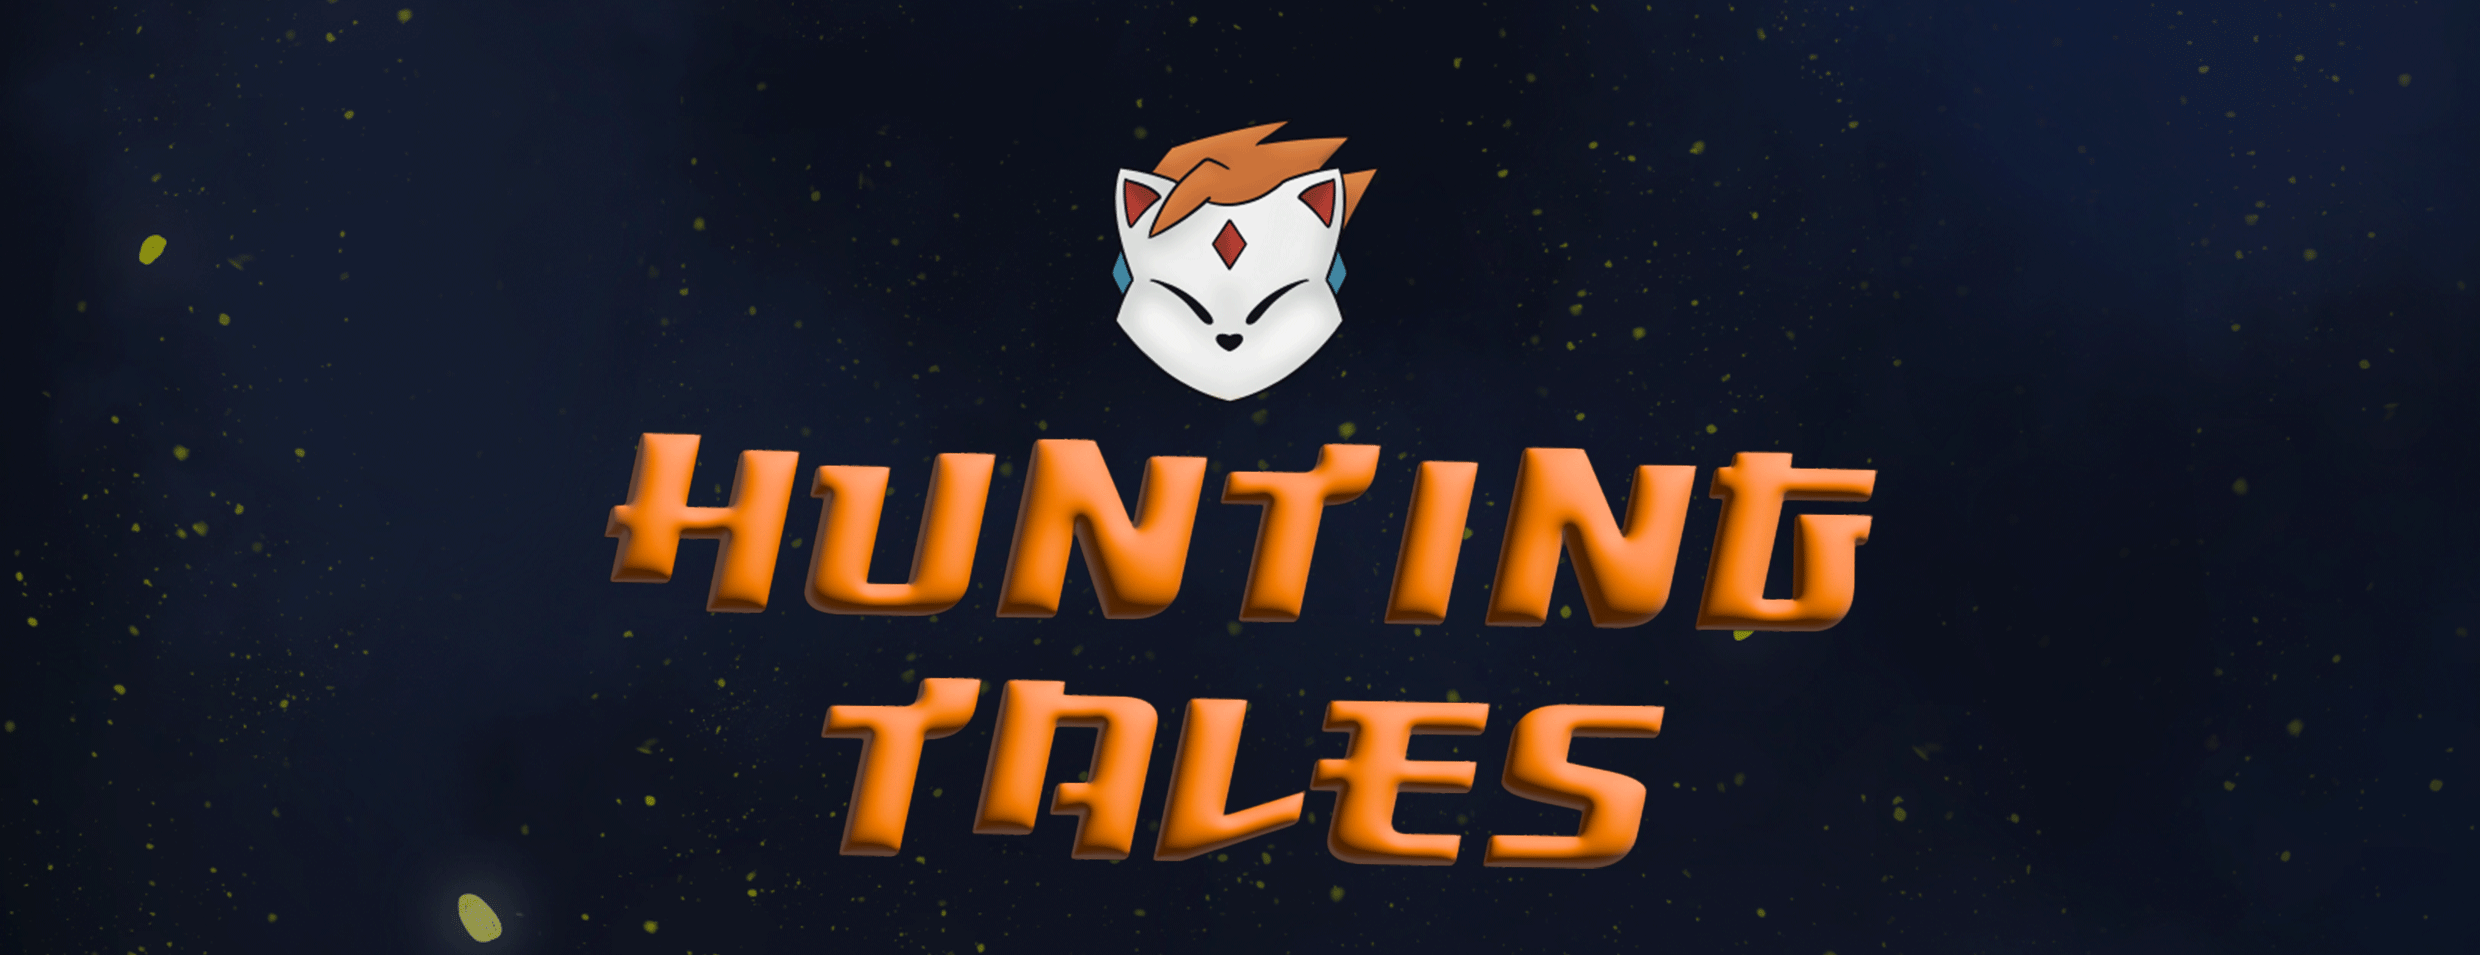 Hunting Tales